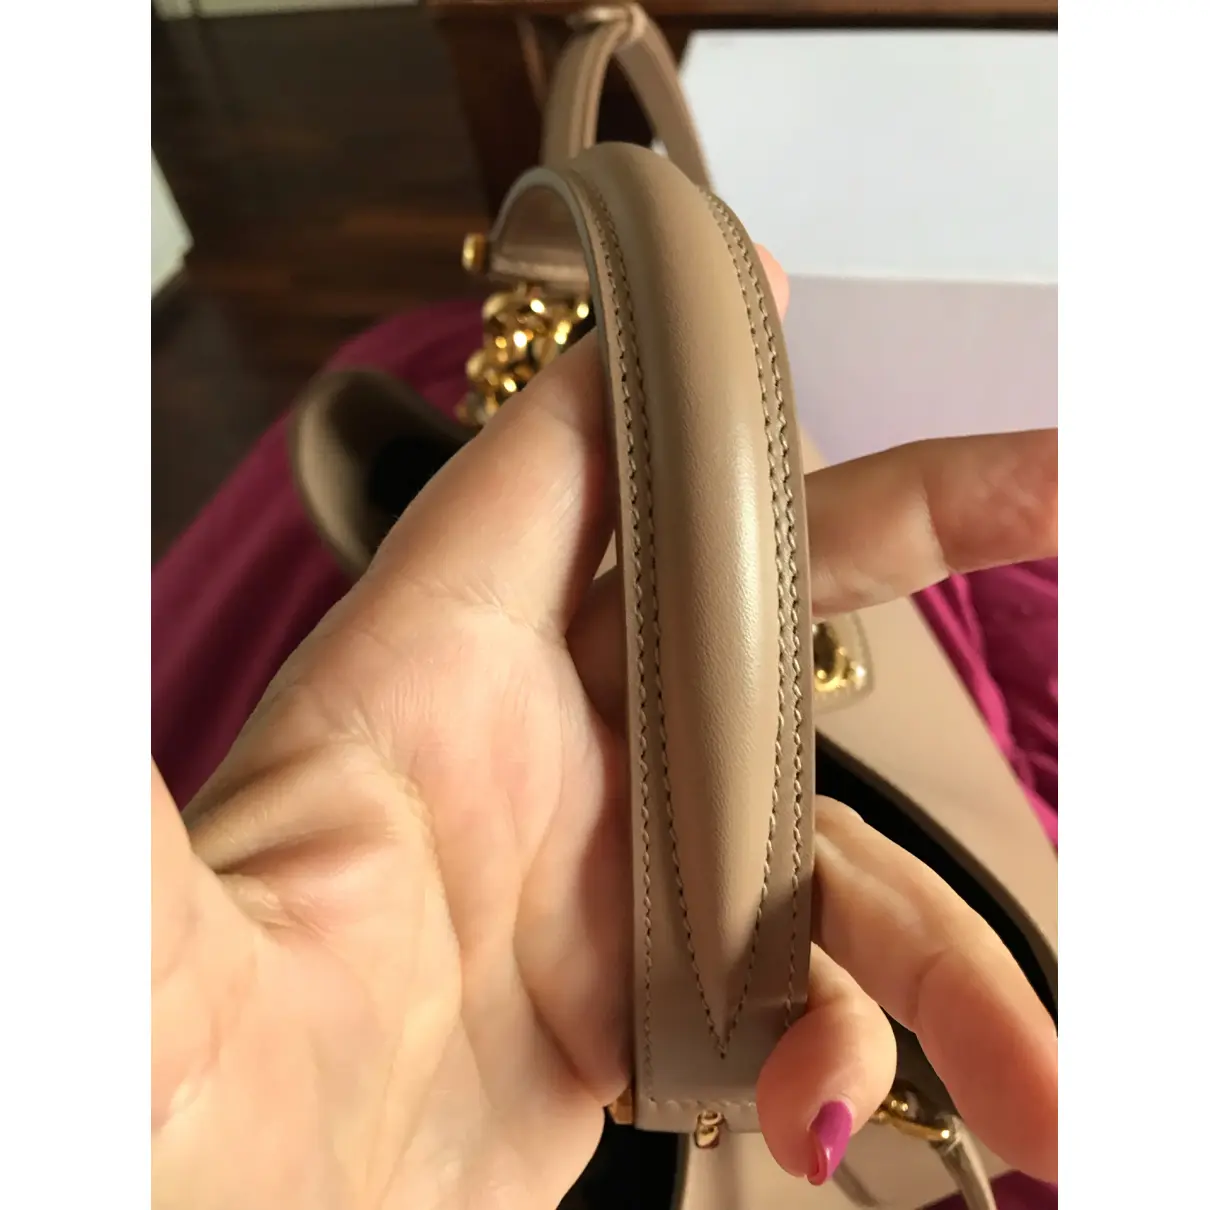 Buy Dolce & Gabbana DG Amore leather handbag online